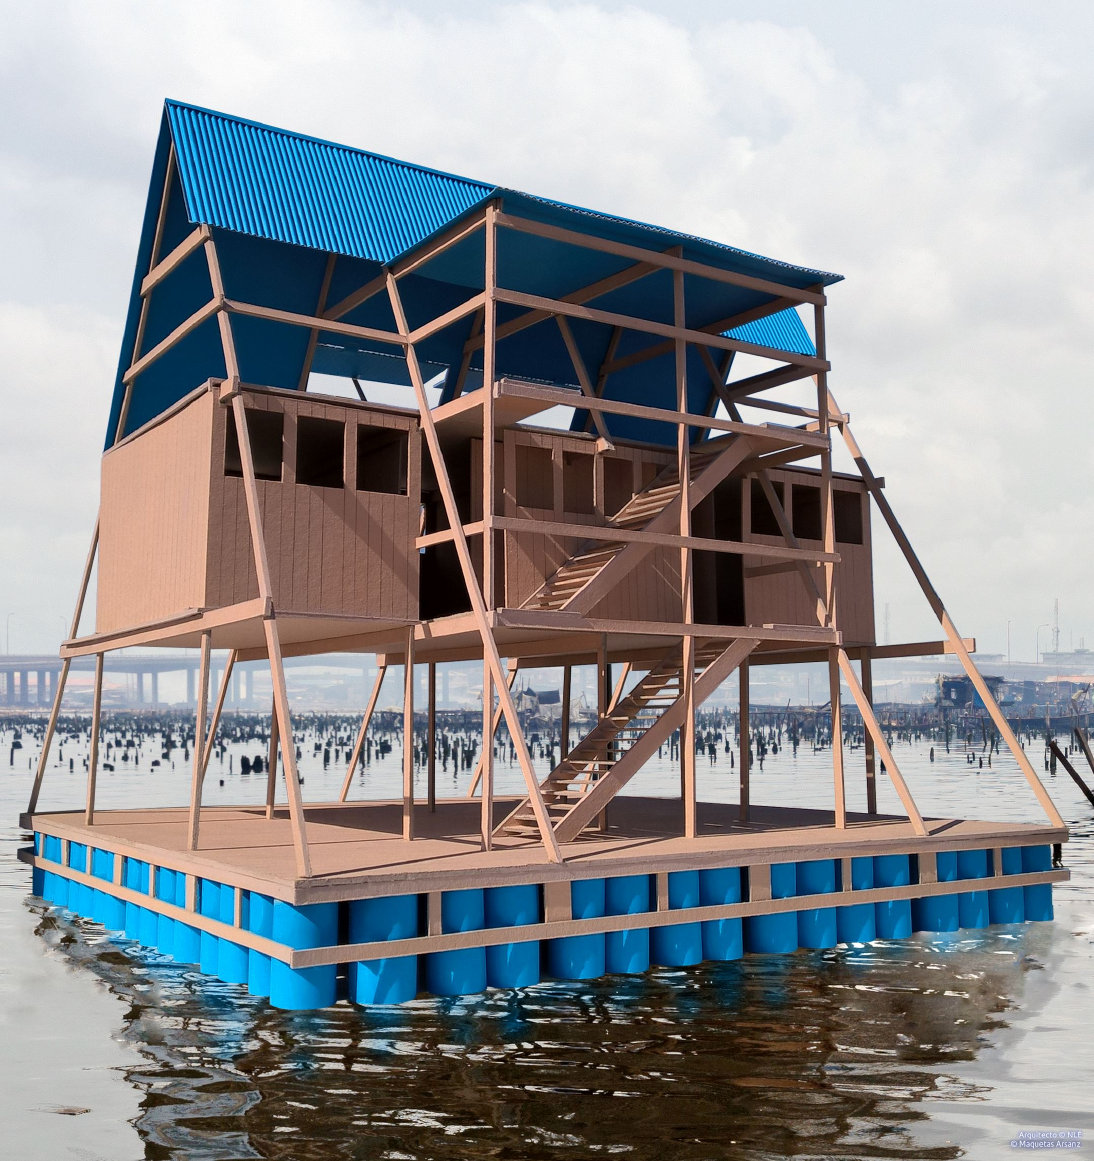 Maqueta escuela flotante Makoko Lagos Nigeria NLE Kunle Adeyemi